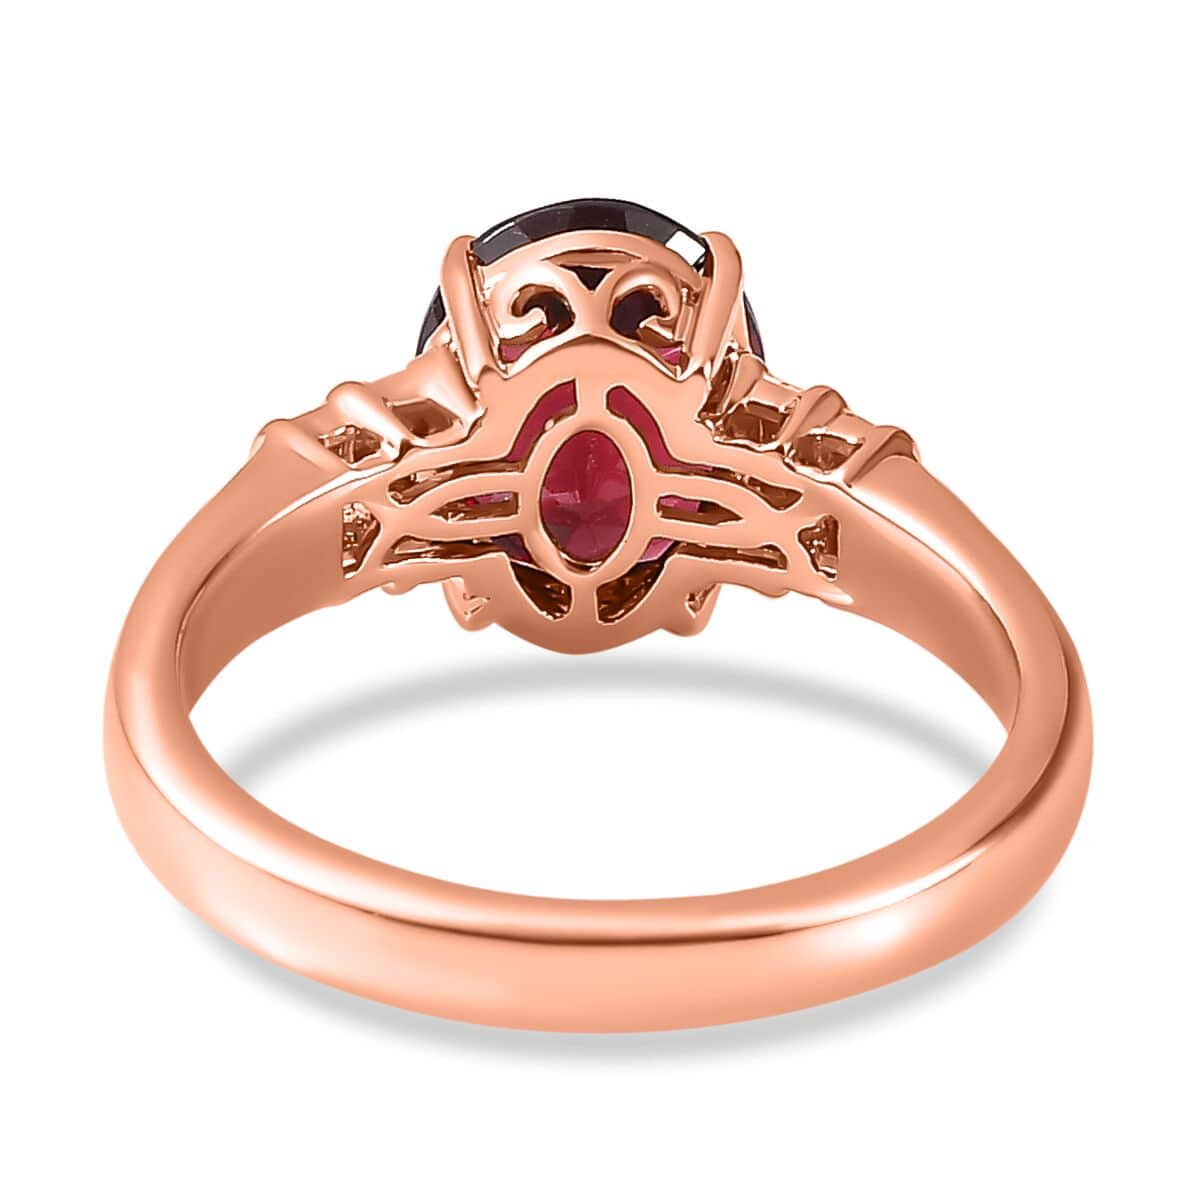 Luxoro 10K Rose Gold Premium Orissa Rhodolite Garnet and G-H I2 Diamond Statement Ring (Size 9.0) 3.10 ctw image number 4